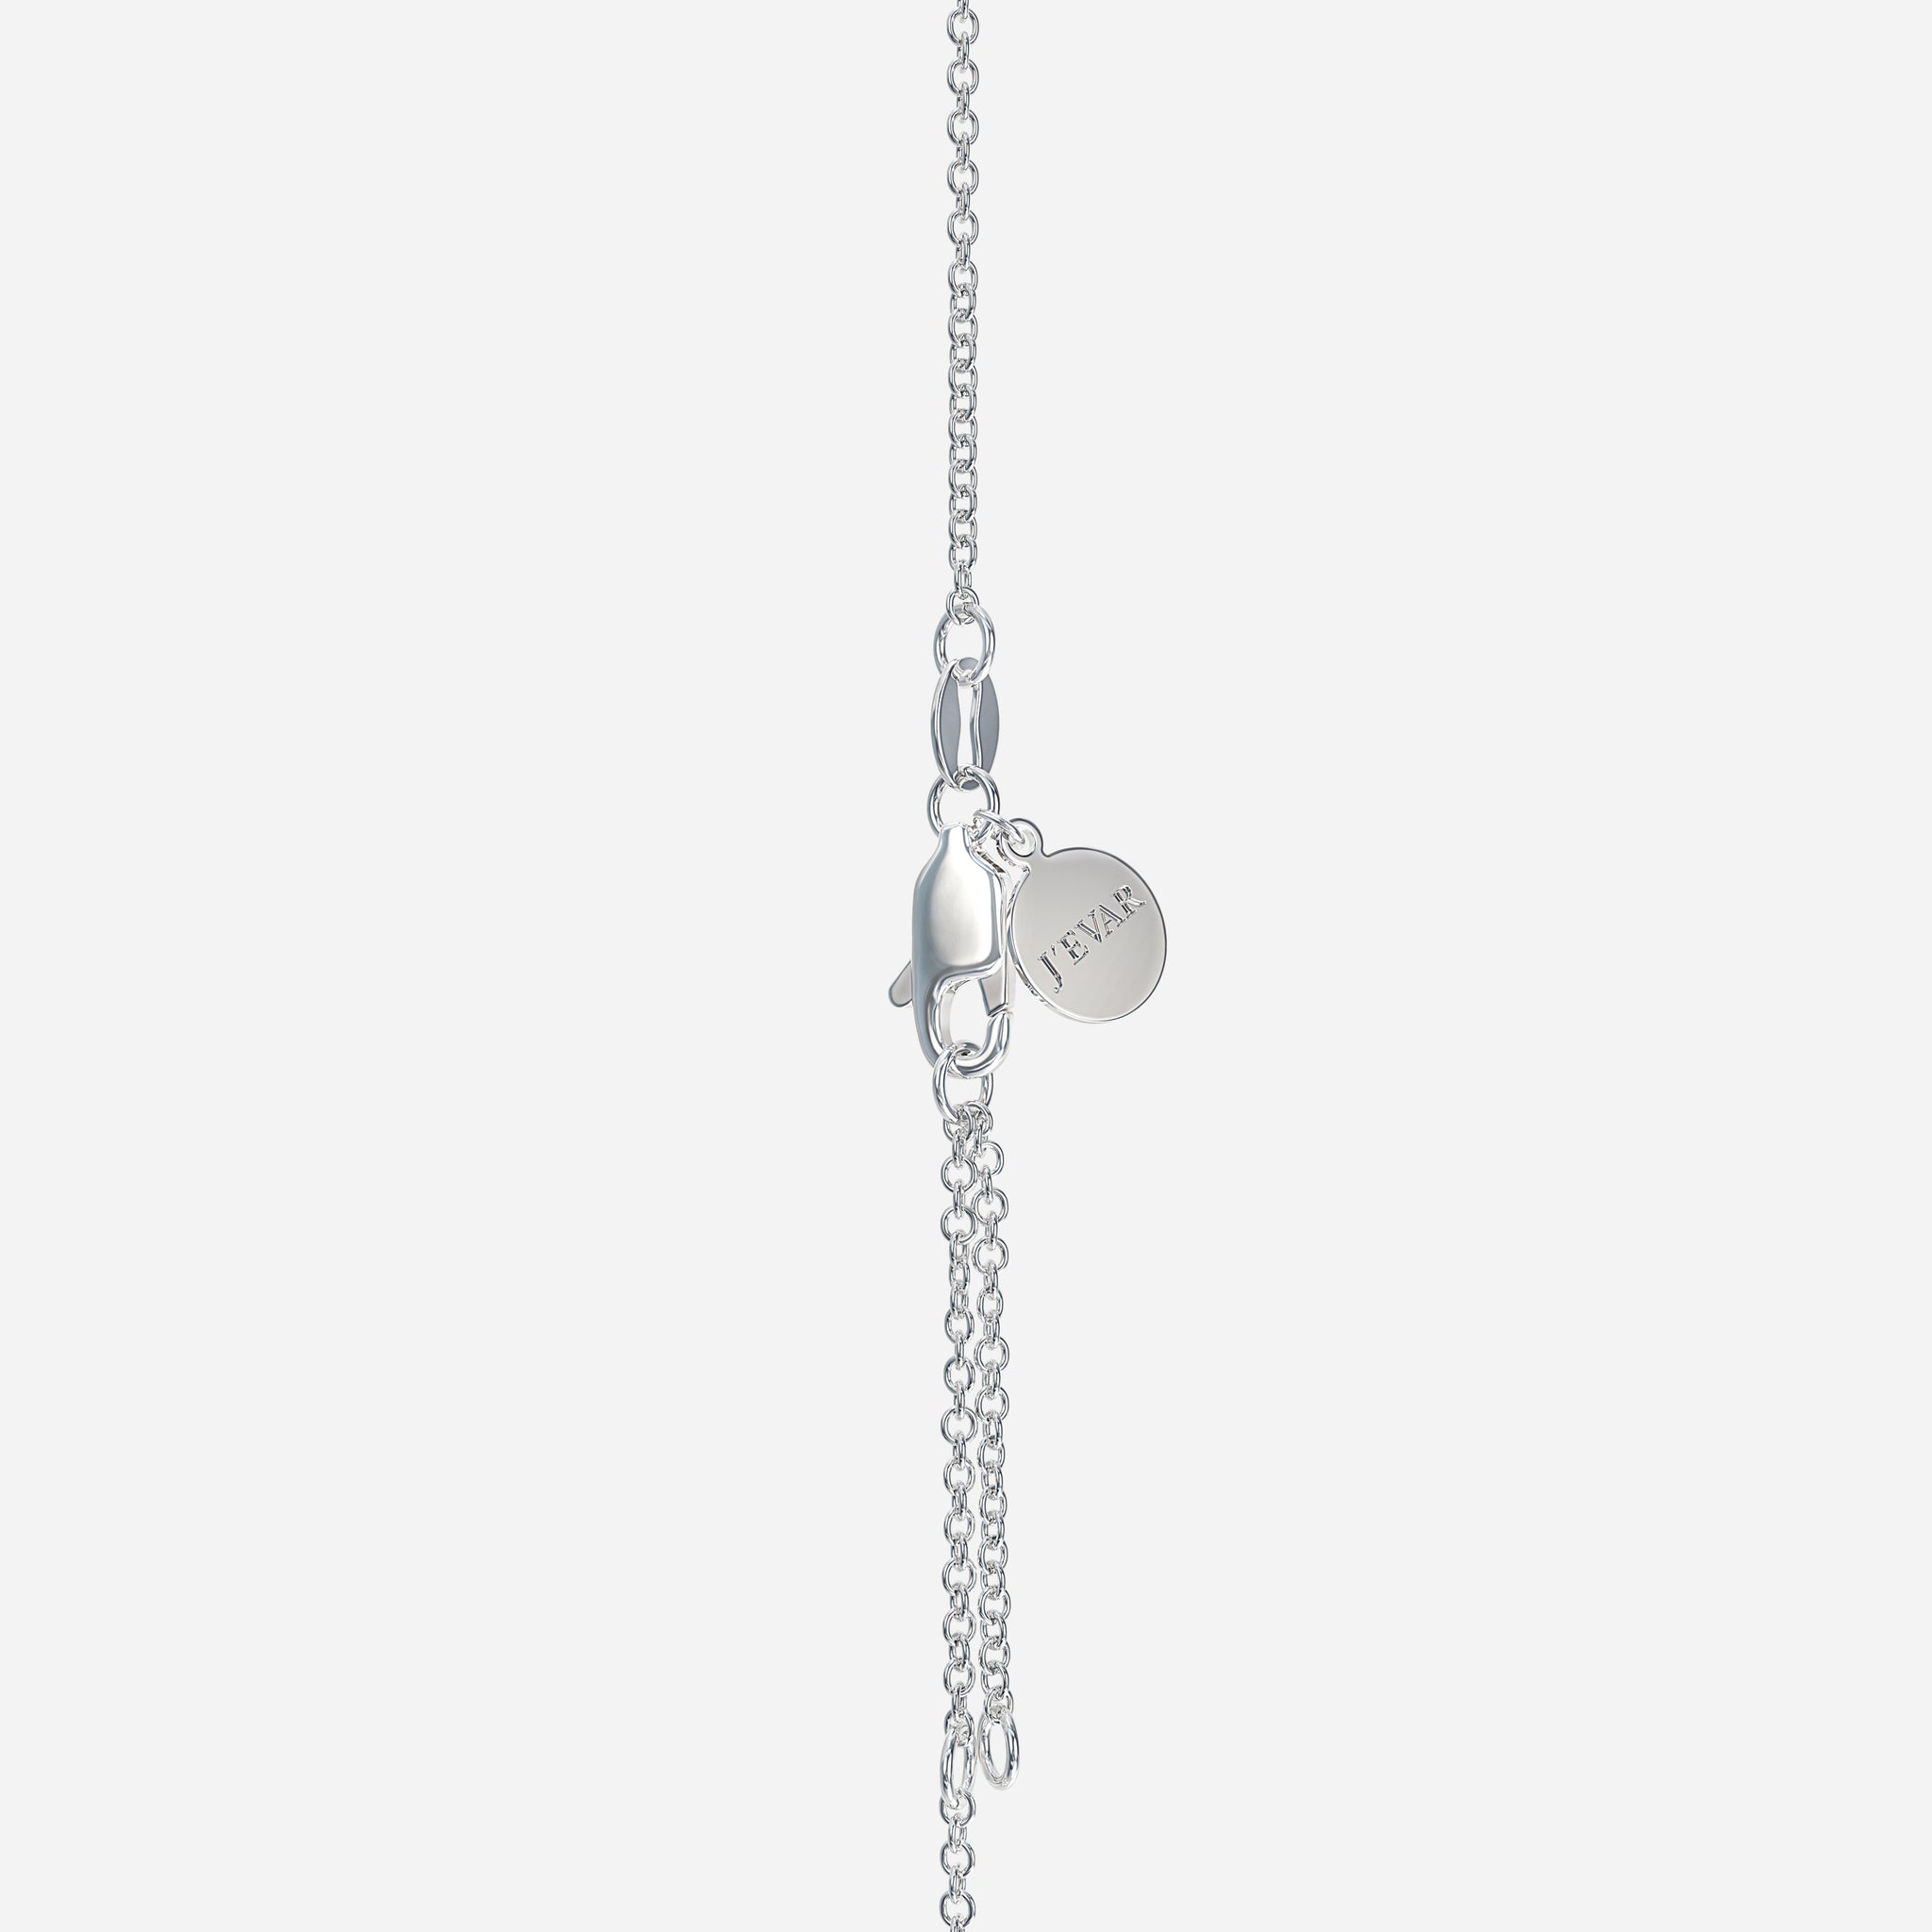 J'EVAR Sterling Silver Adjustable Heart Key ALTR Lab Grown Diamond Necklace Lock View